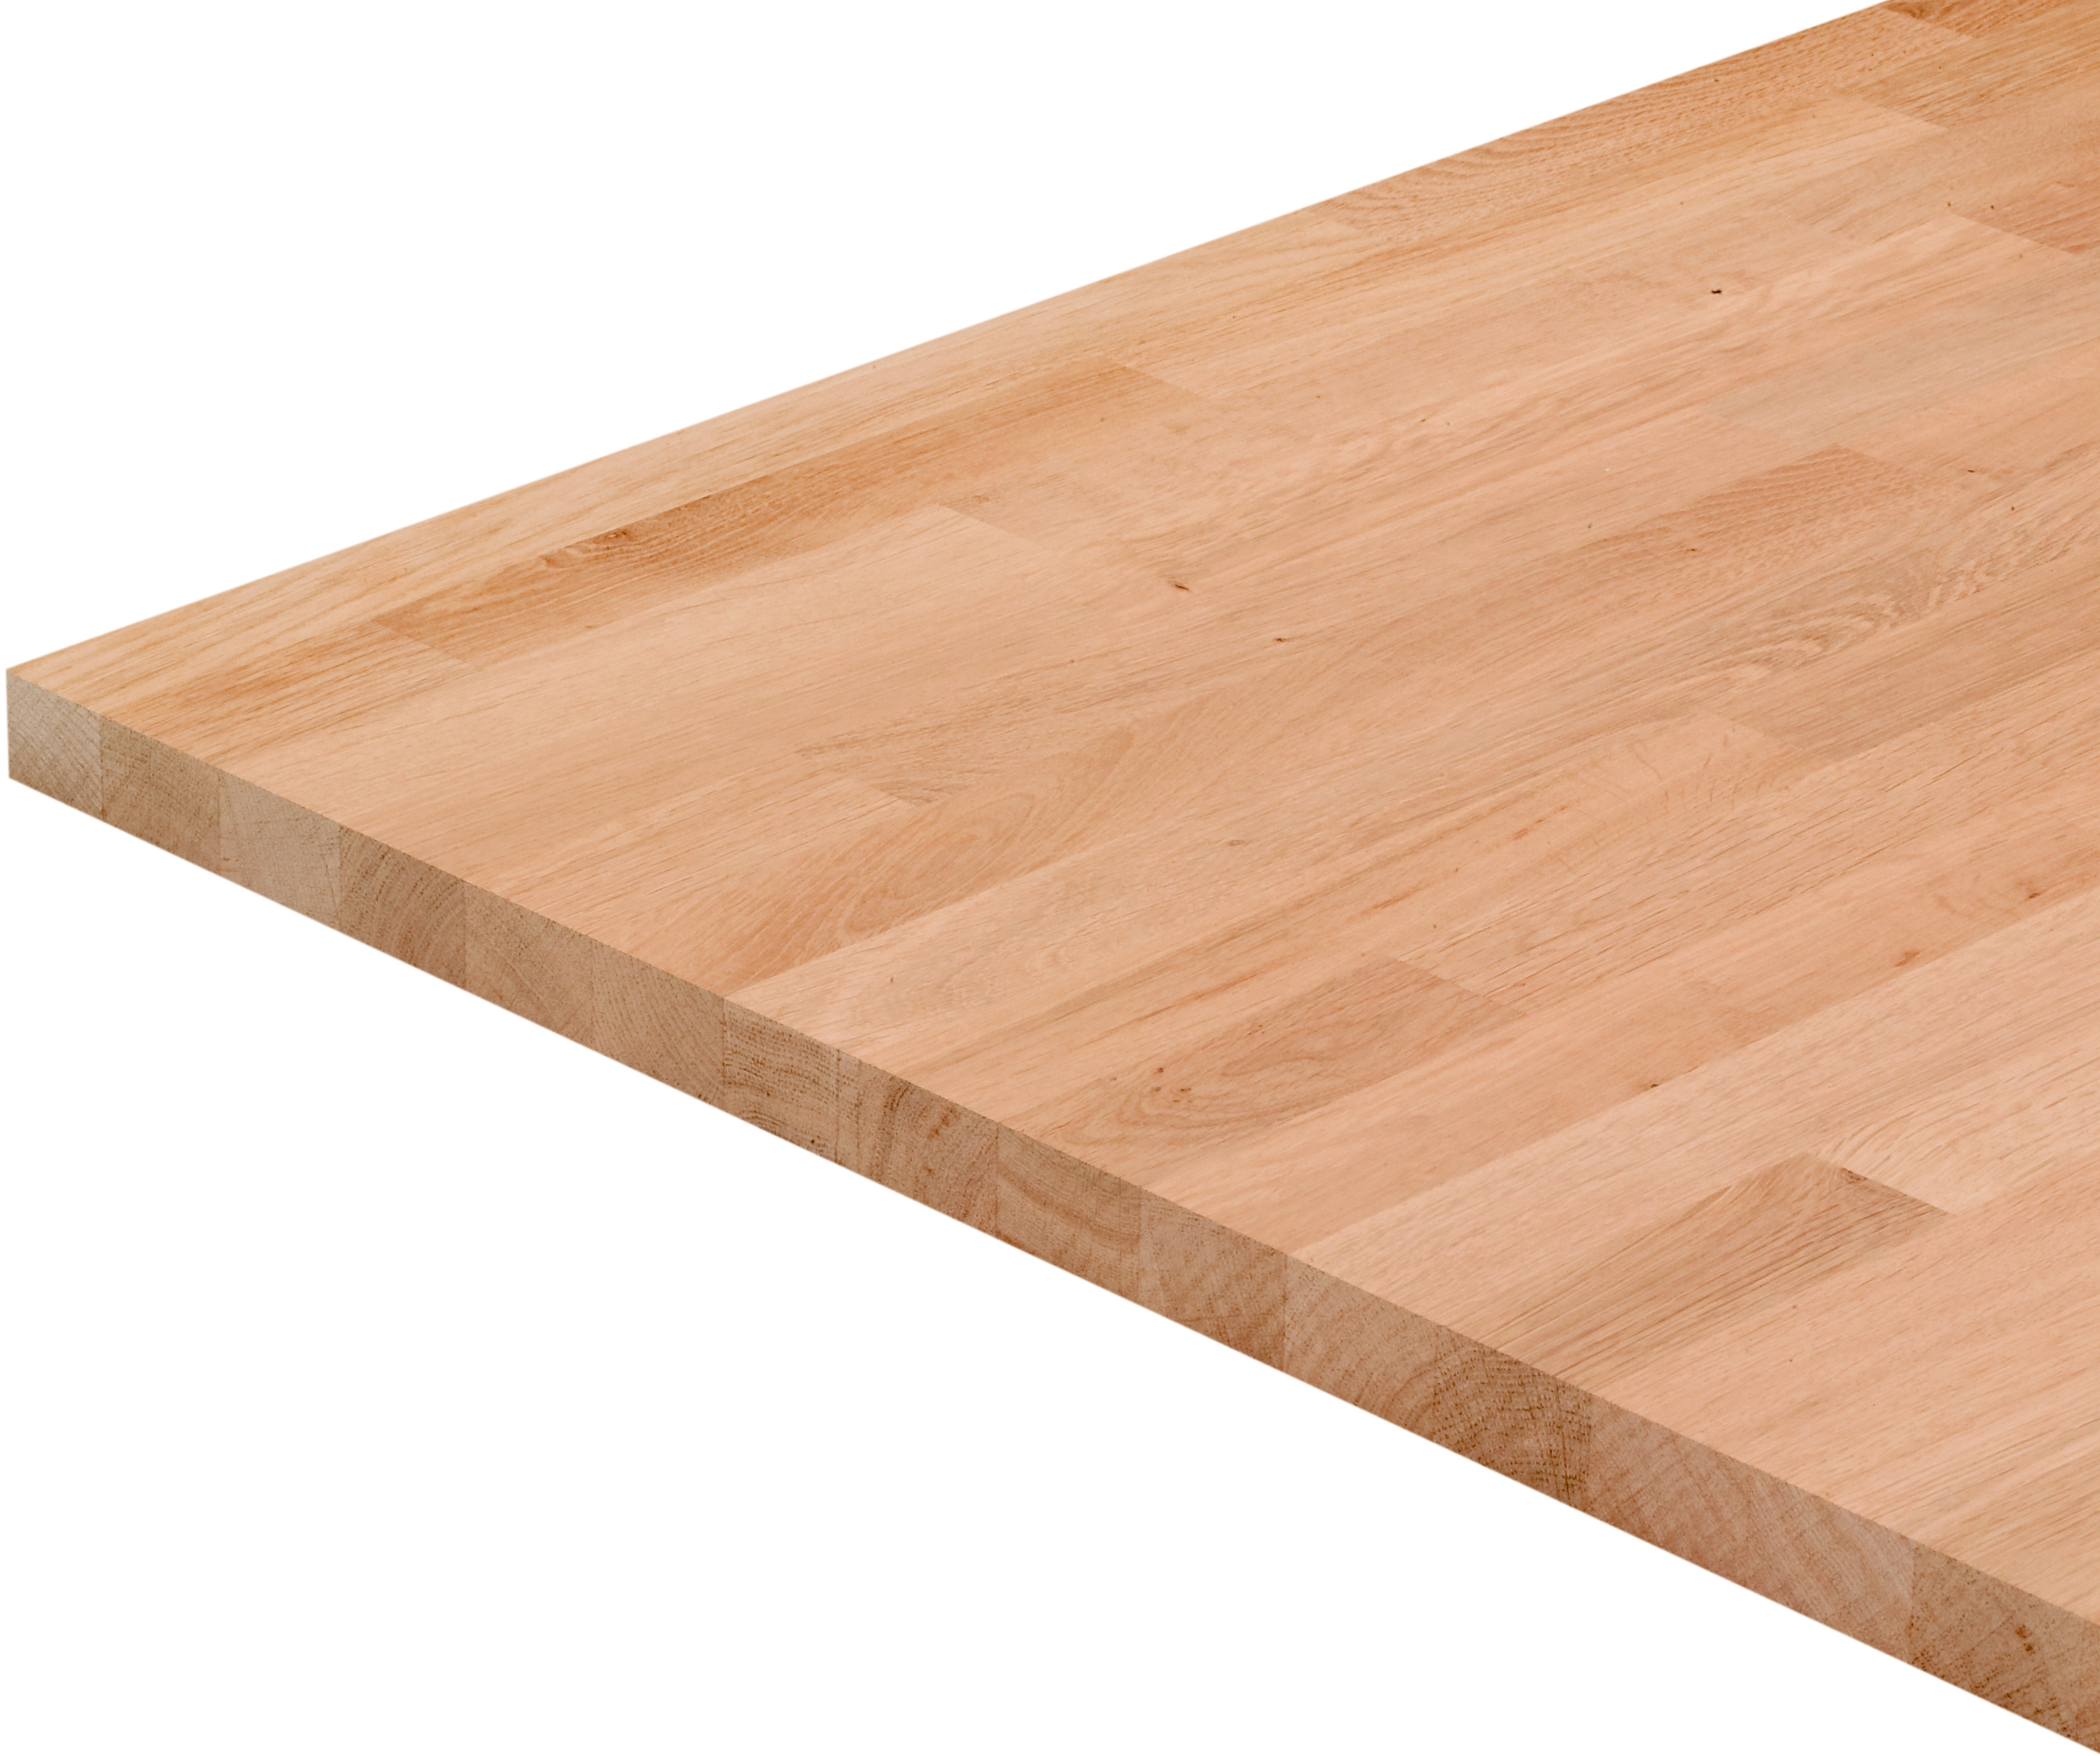 Massivholz Arbeitsplatte Buche 240 cm kaufen bei OBI x 2,7 x cm 63,5 cm